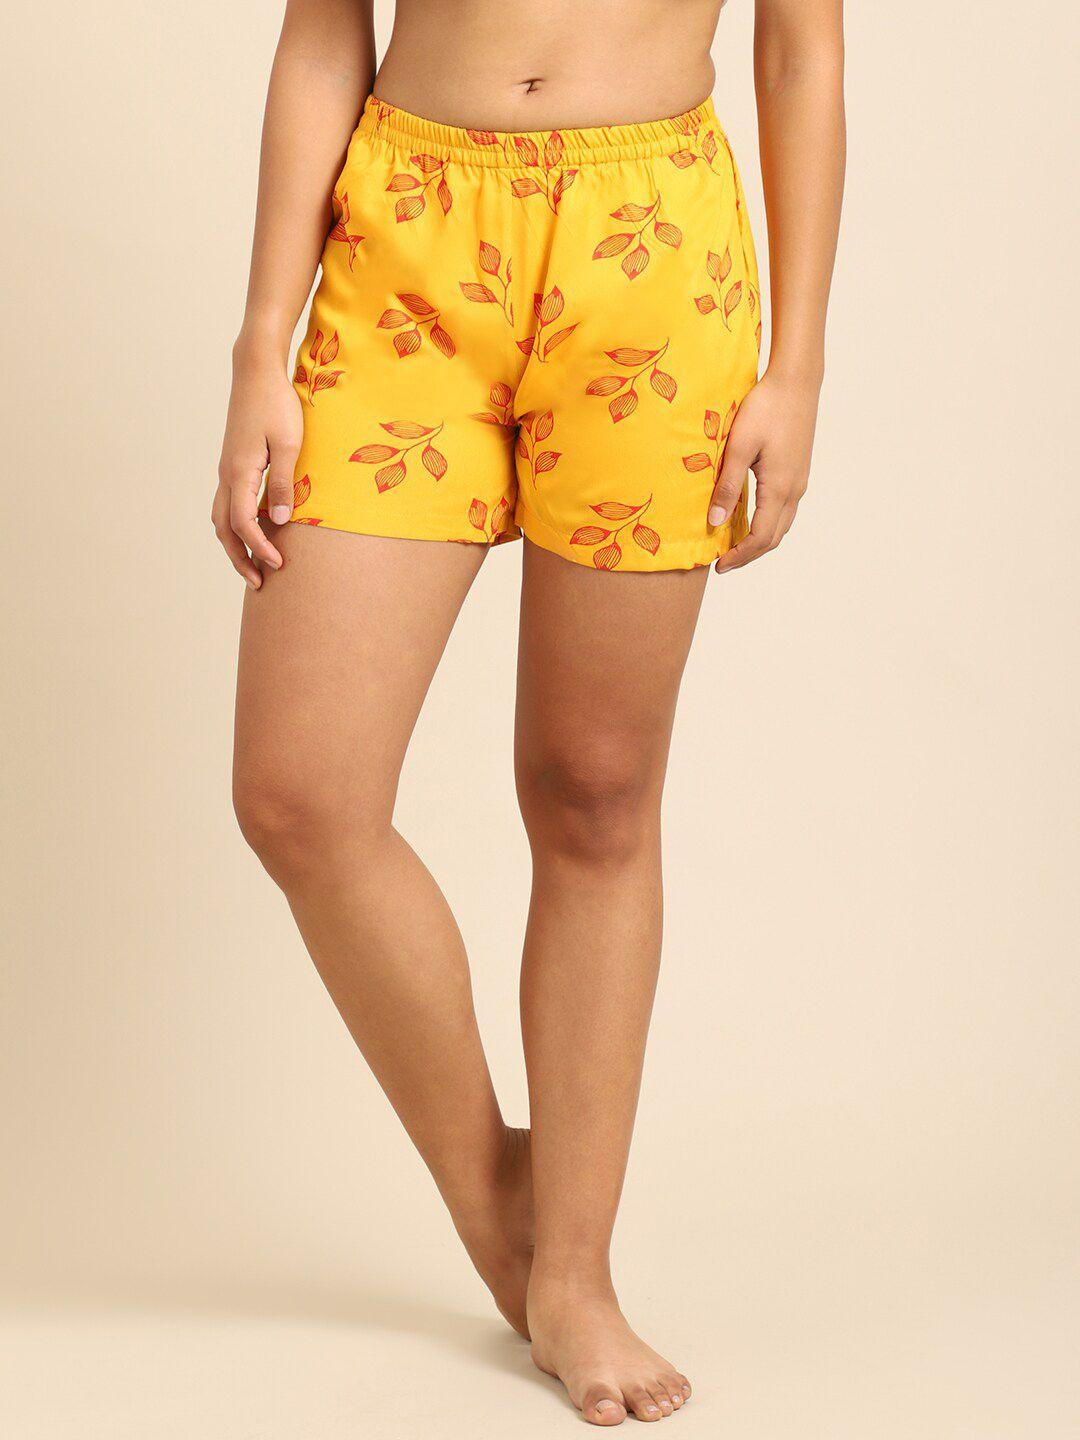 katn india women yellow & red printed lounge shorts